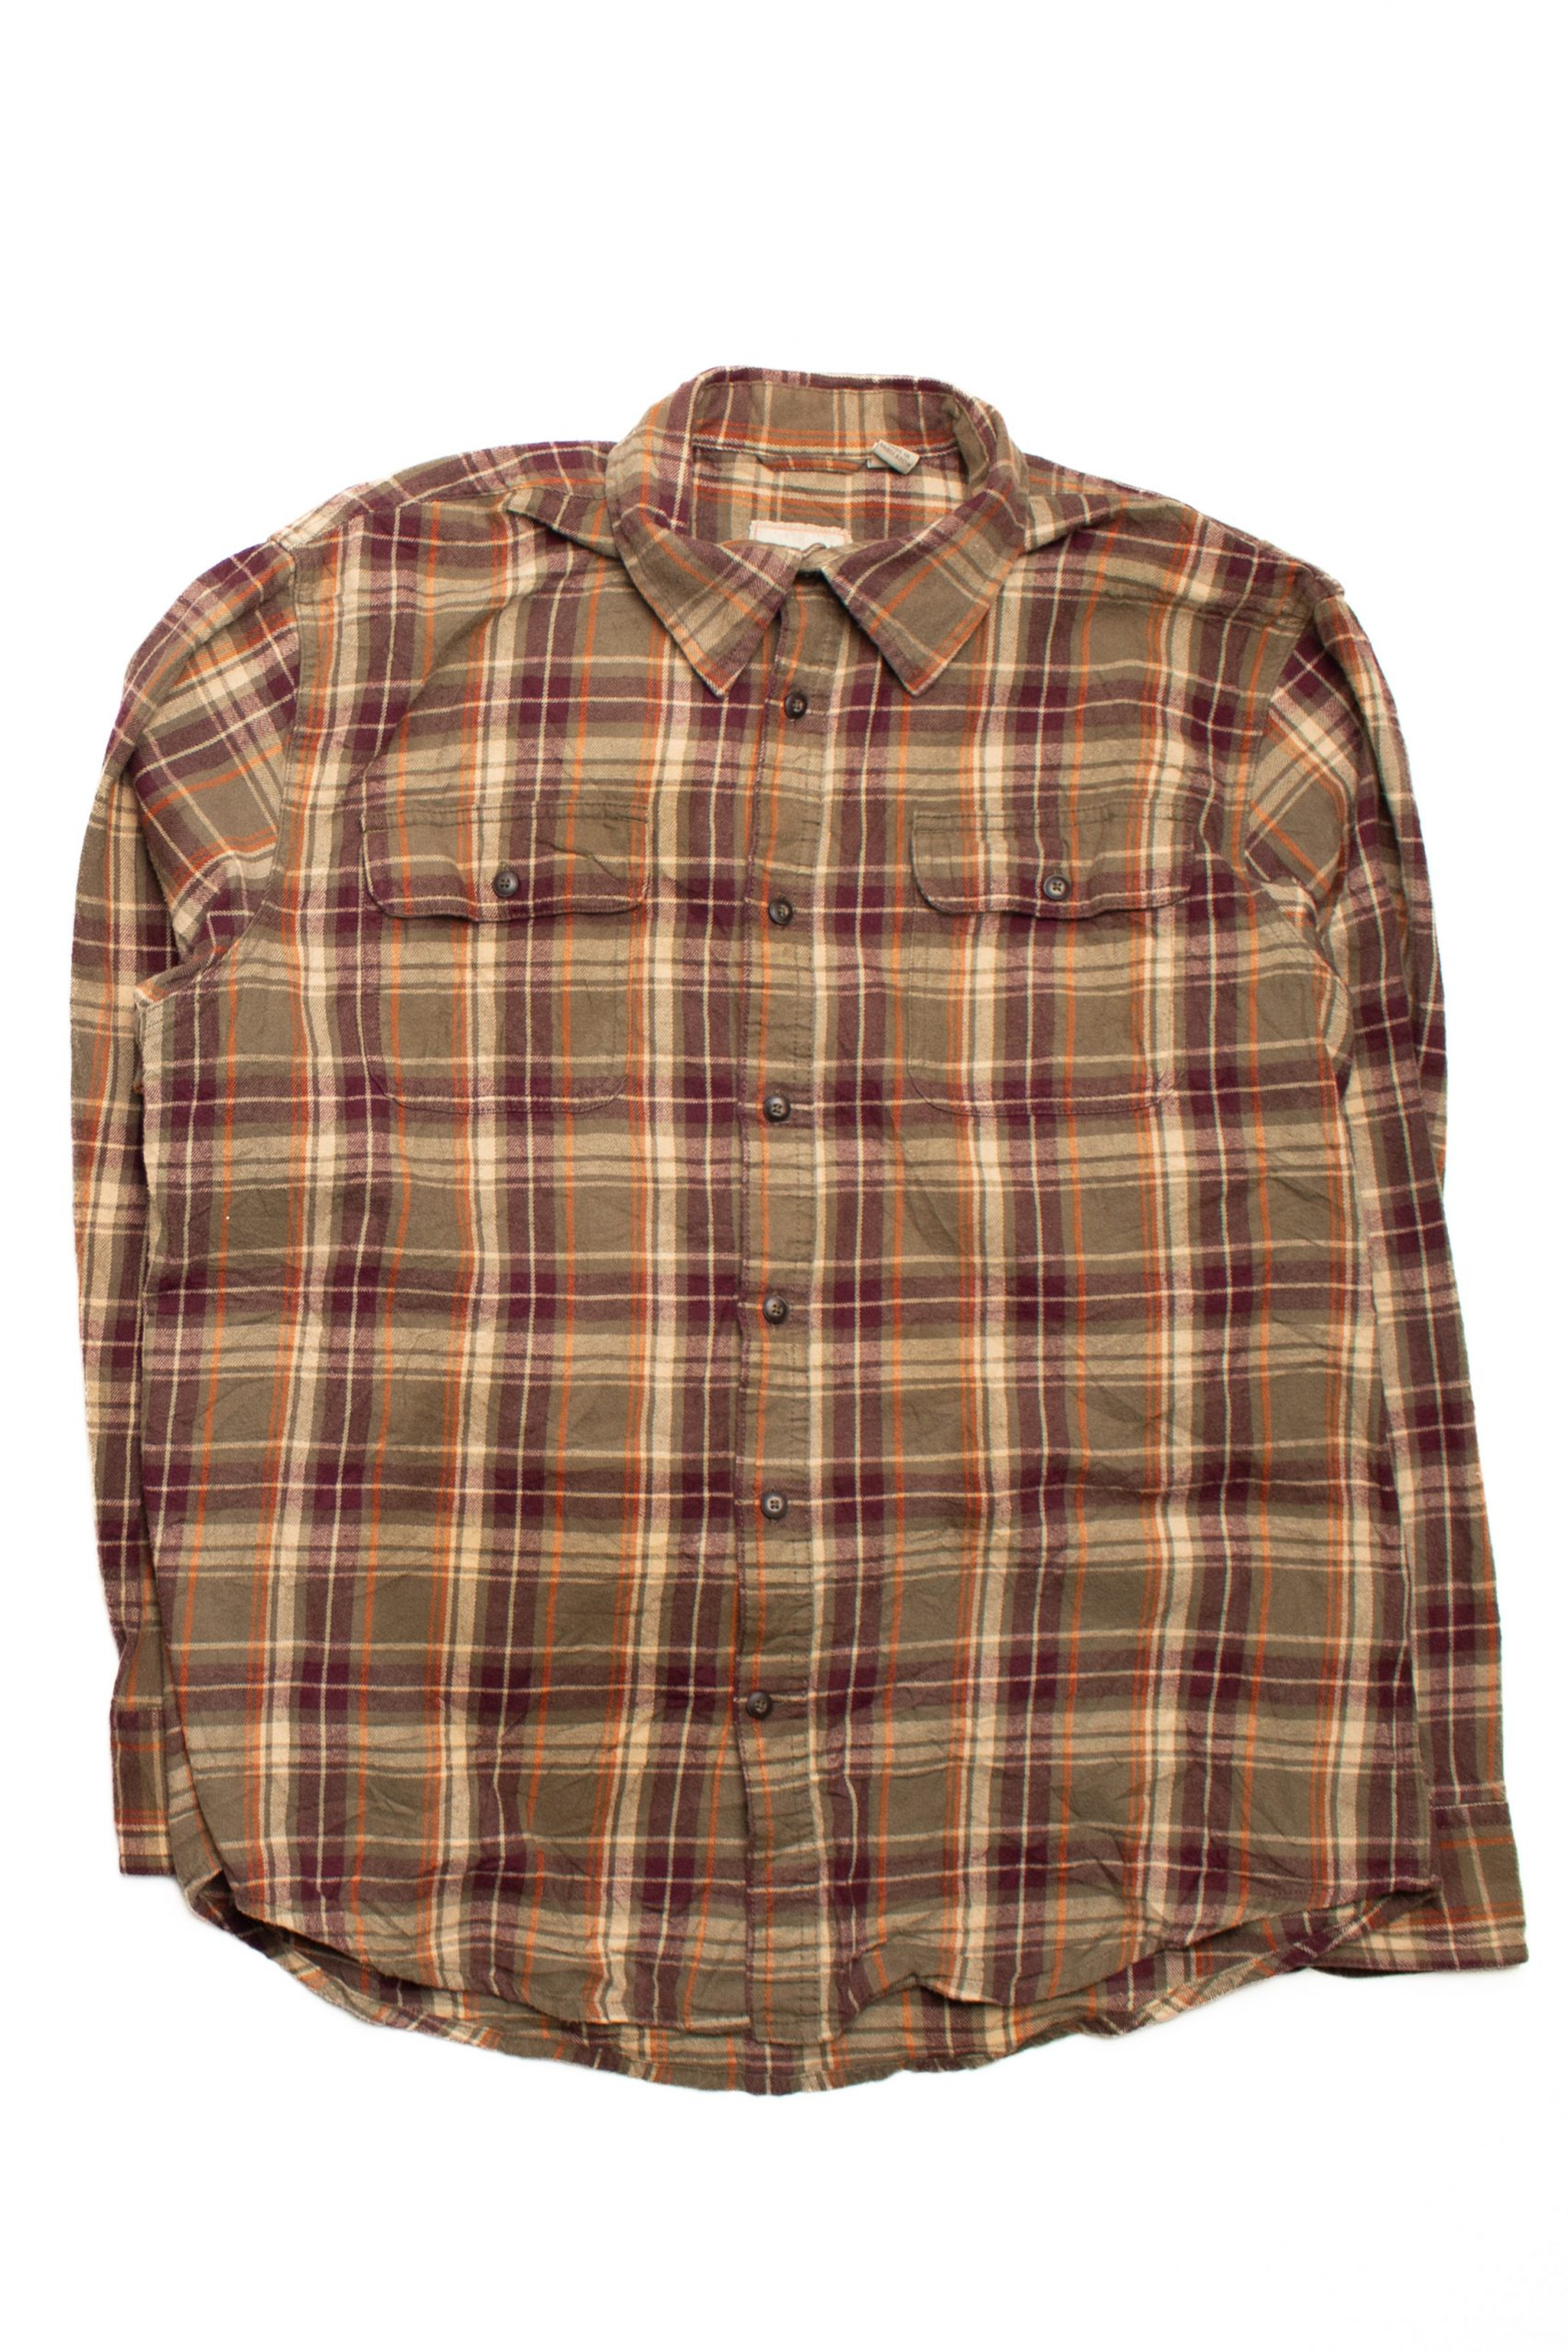 Vintage GH Bass Earth Flannel Shirt (1990s) - Ragstock.com